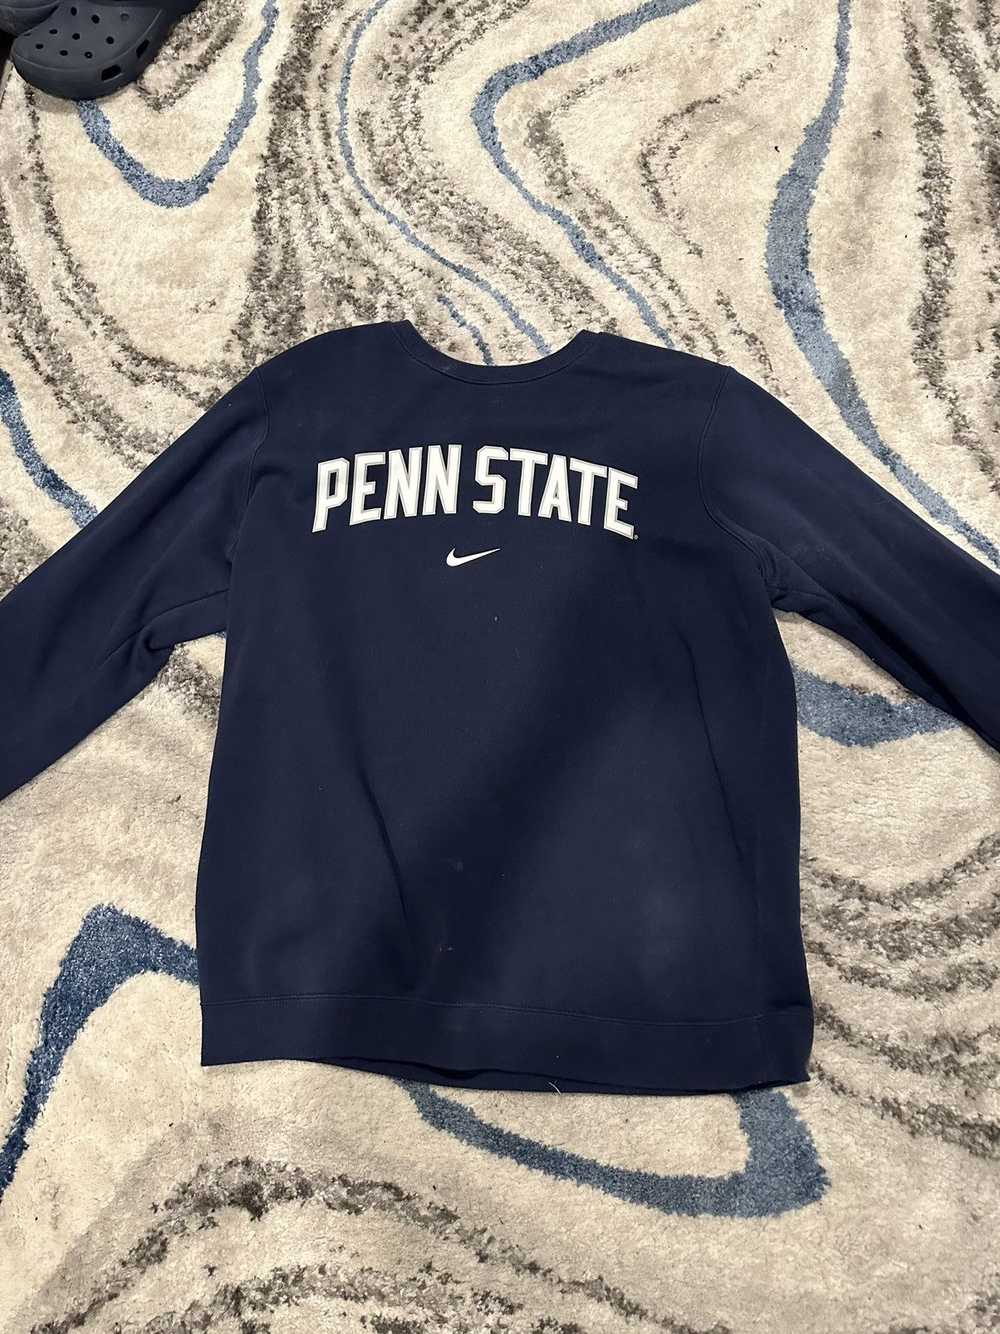 Nike Penn State Nike Sweater - image 1